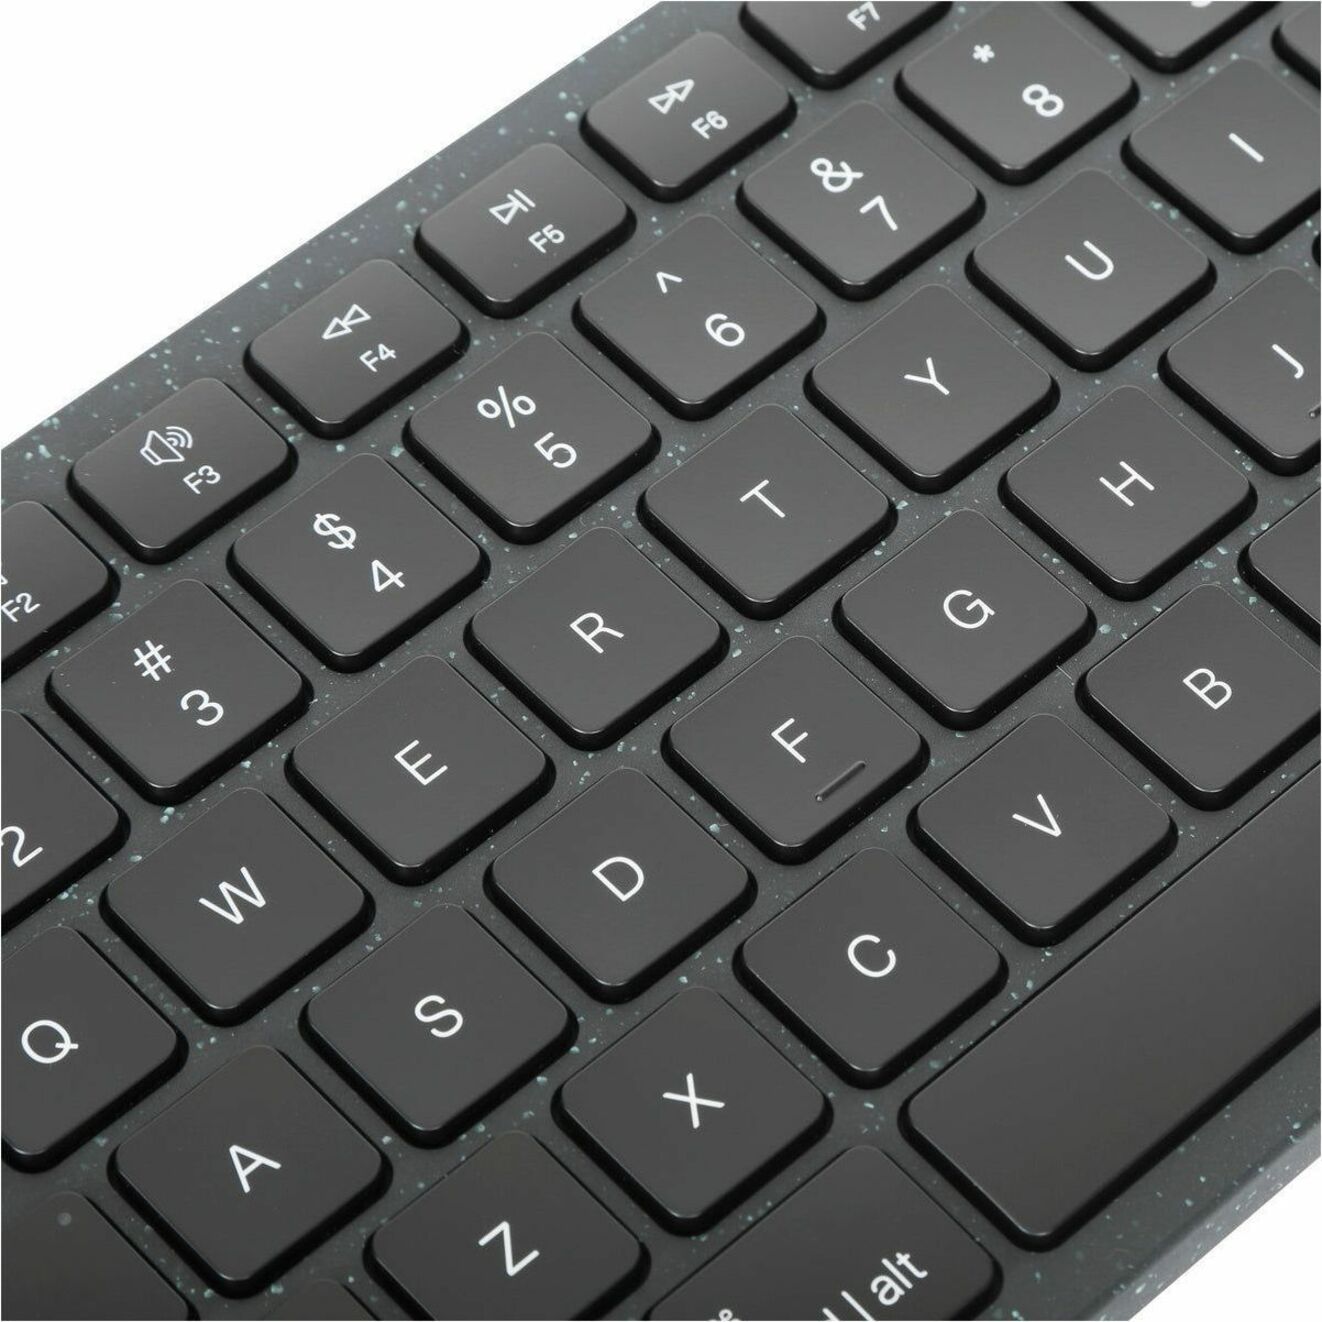 Targus Full-Size Wired EcoSmart Keyboard (AKB874US)